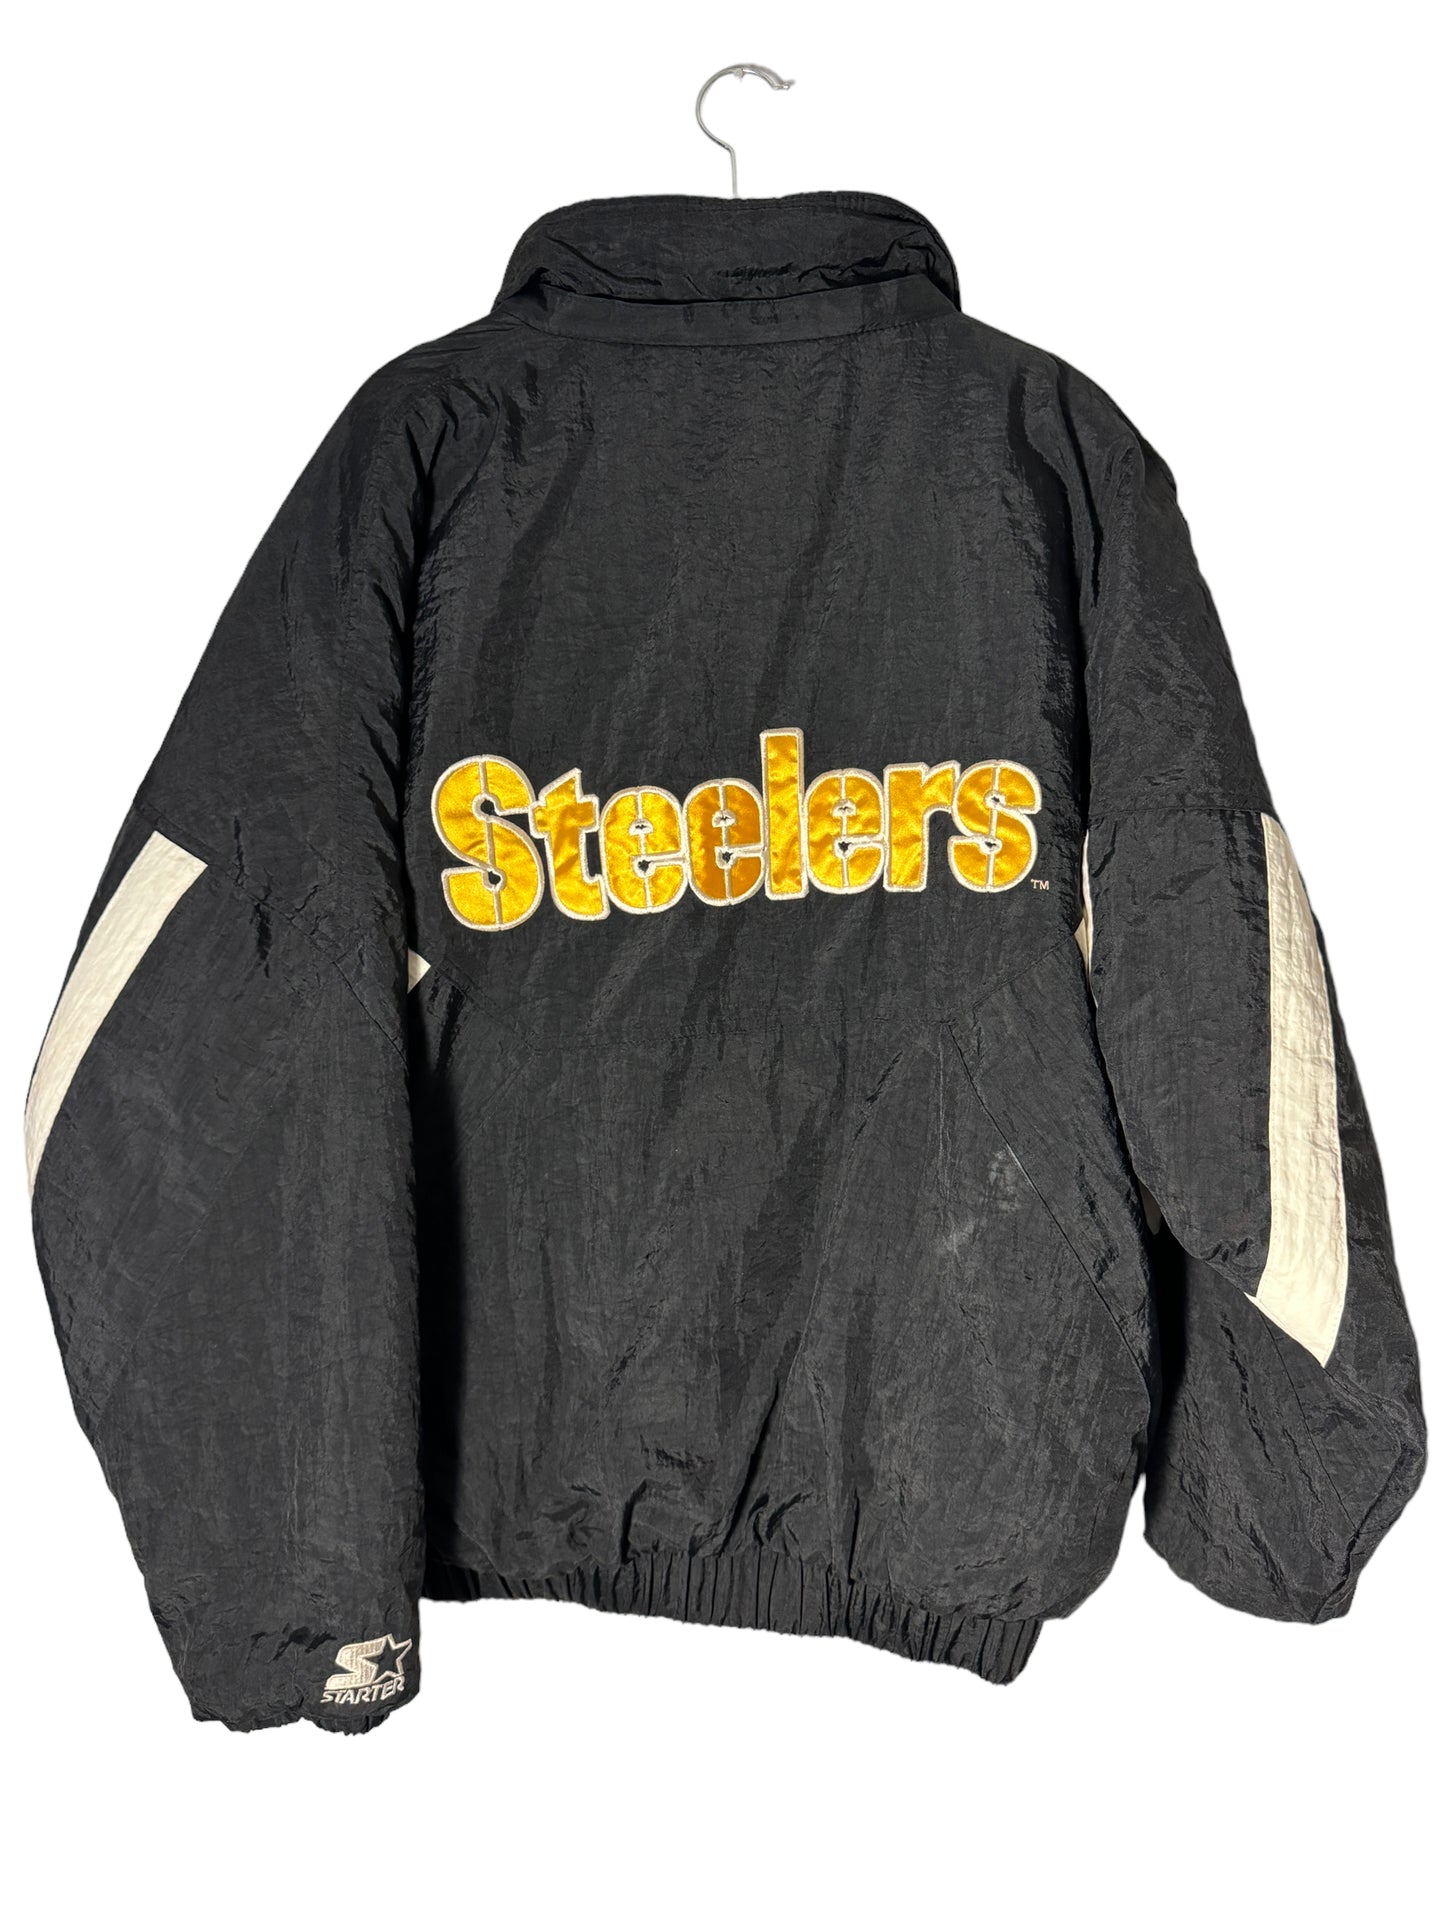 Vintage Pittsburgh Steelers Starter Jacket